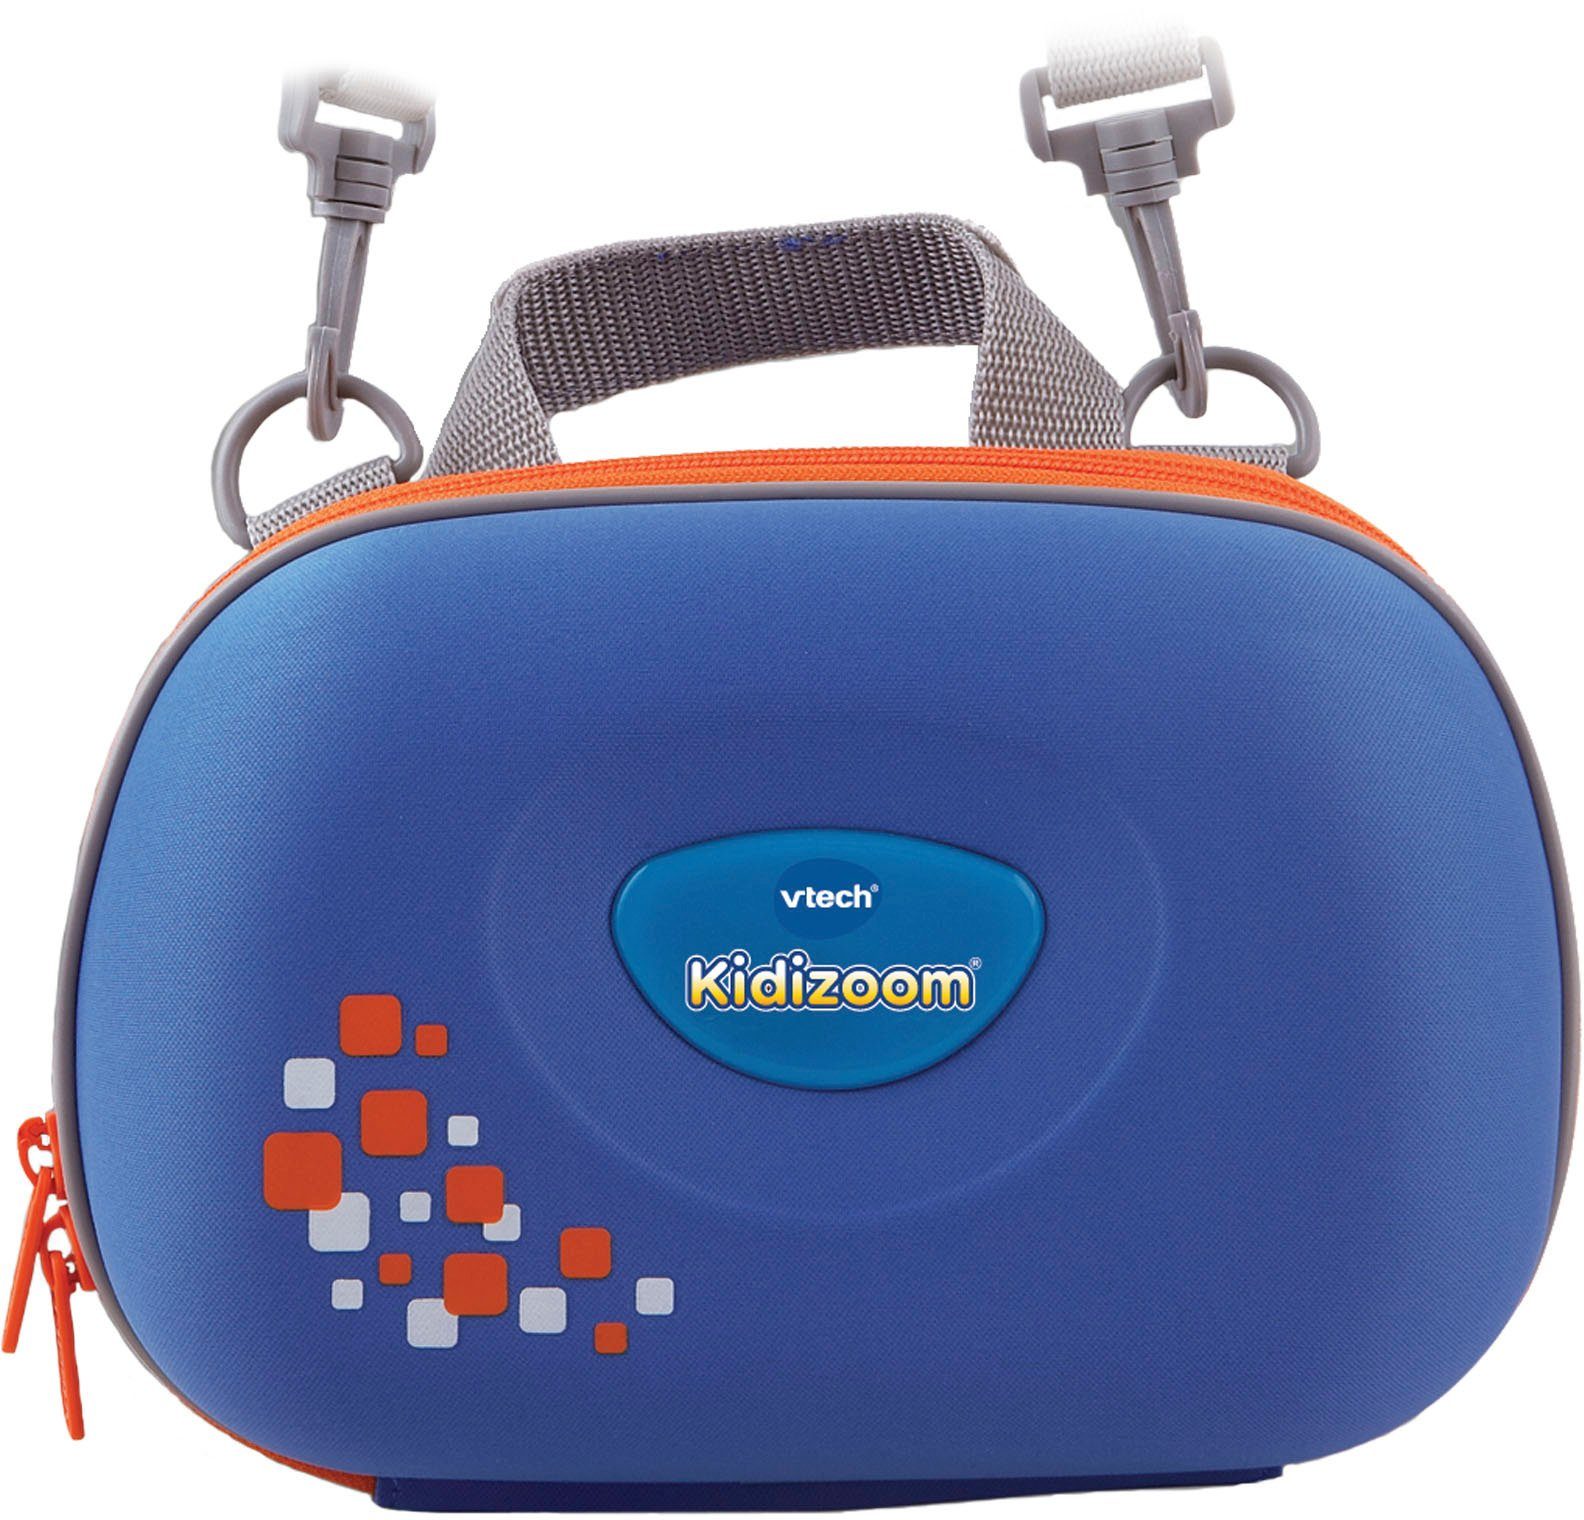 Vtech® KidiZoom Duo blau Pro, Tragetasche) (inklusive Kinderkamera